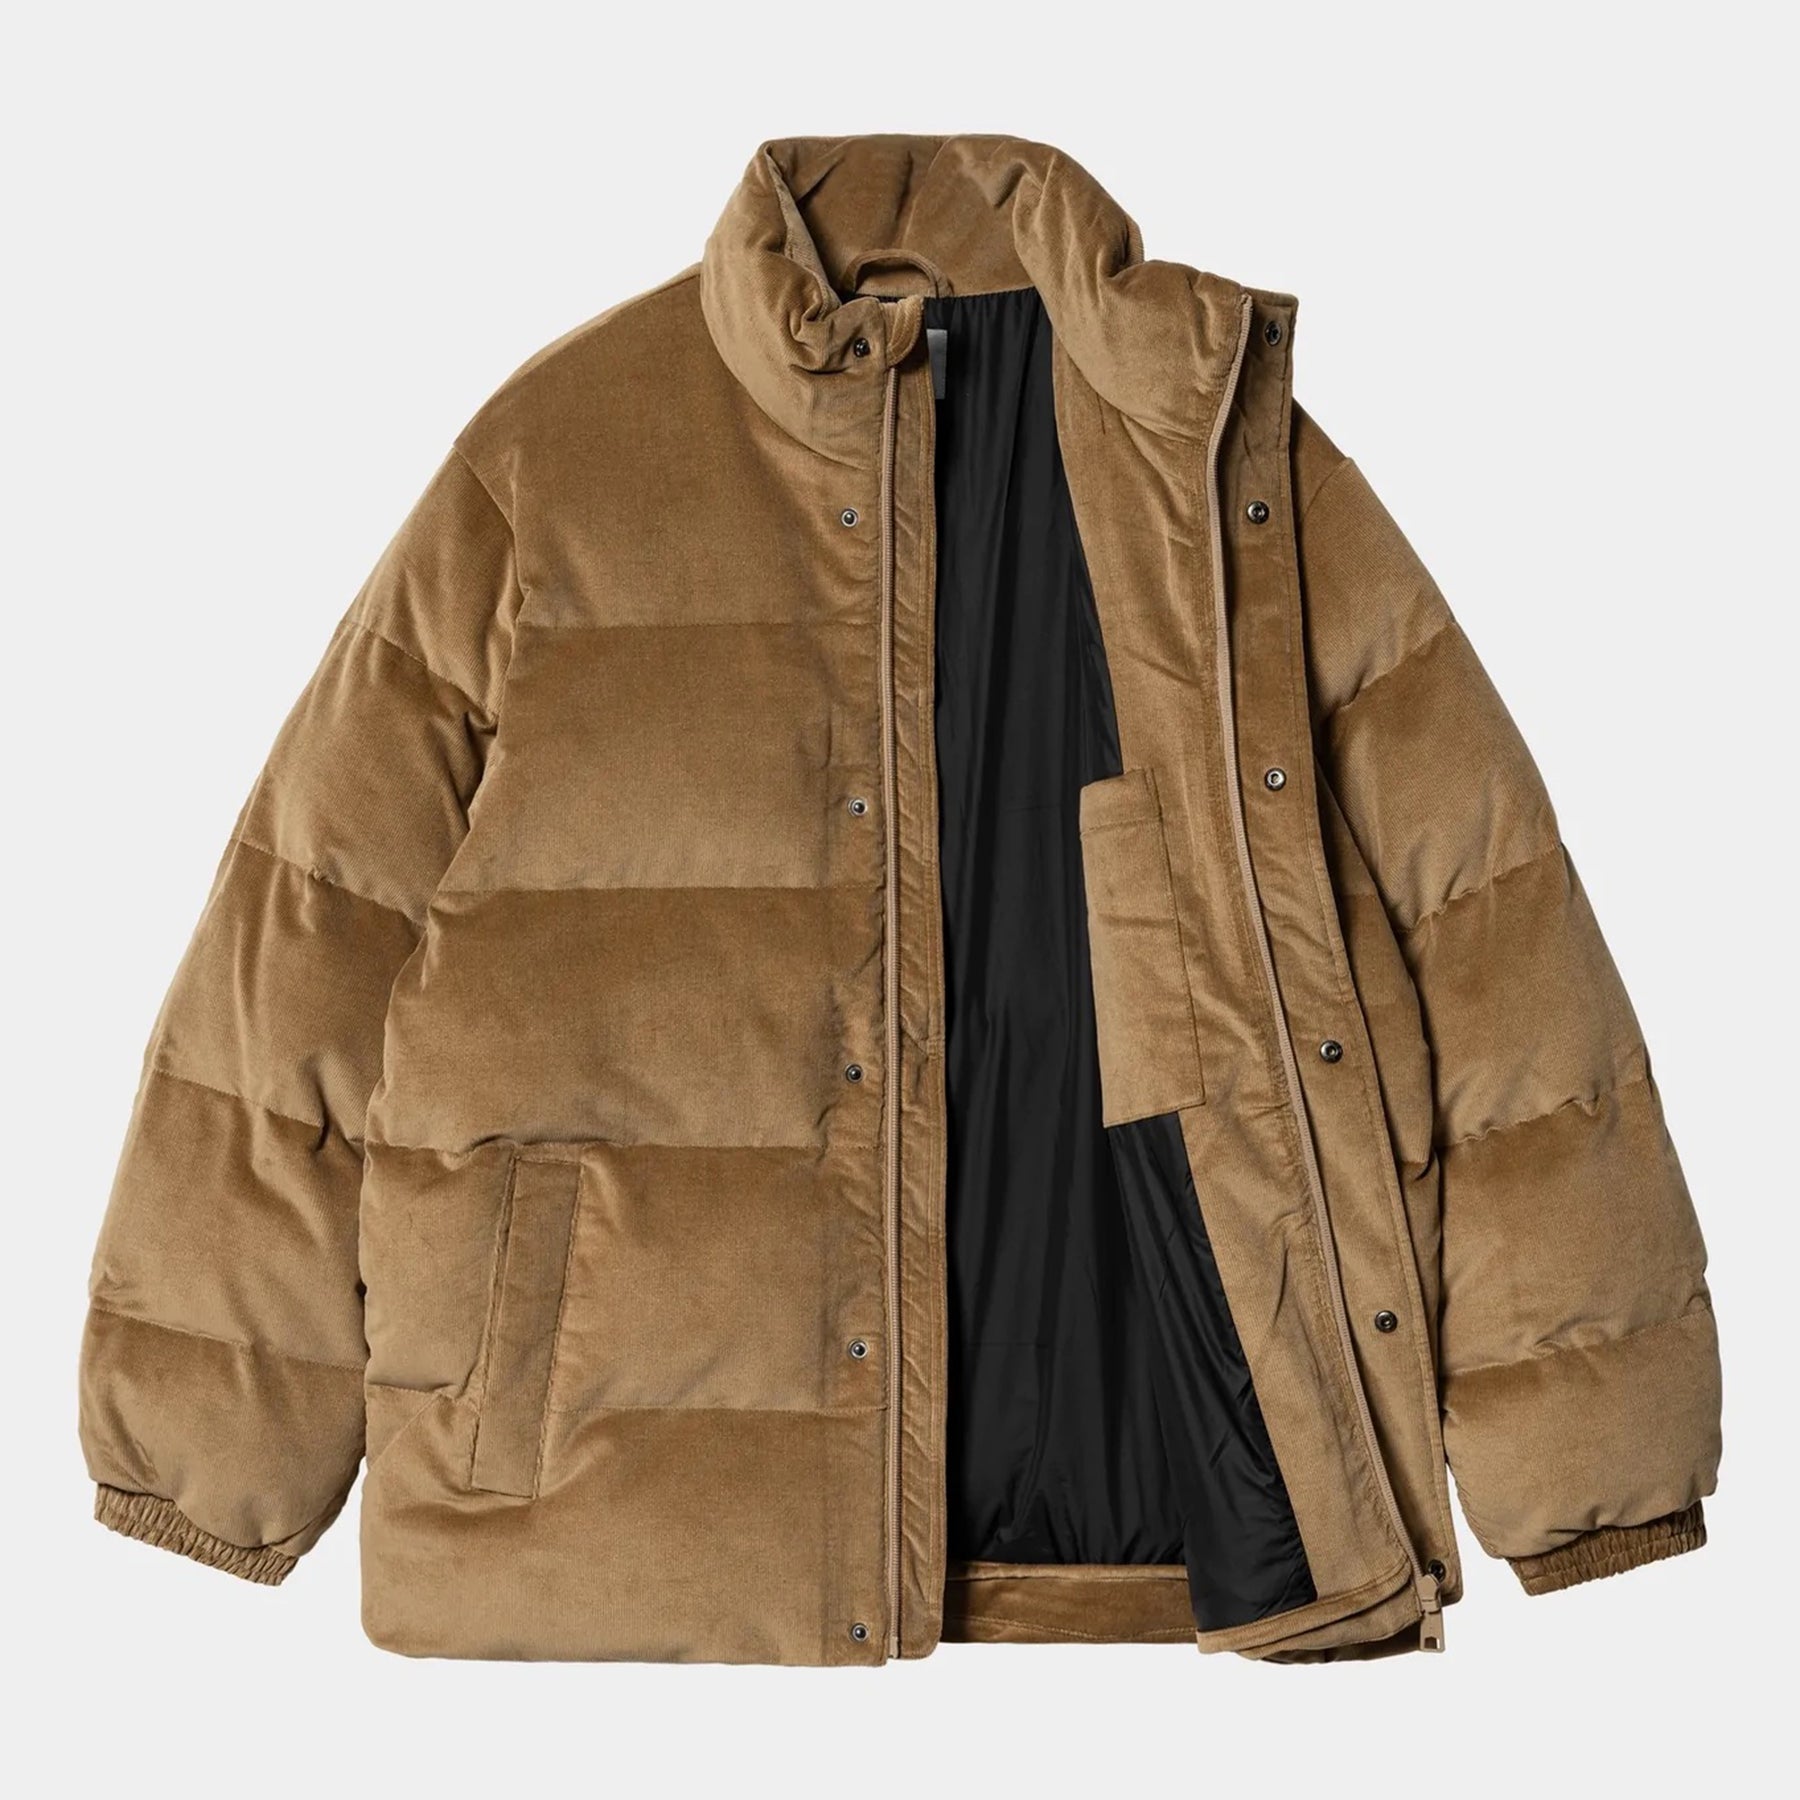 Carhartt jacket layton